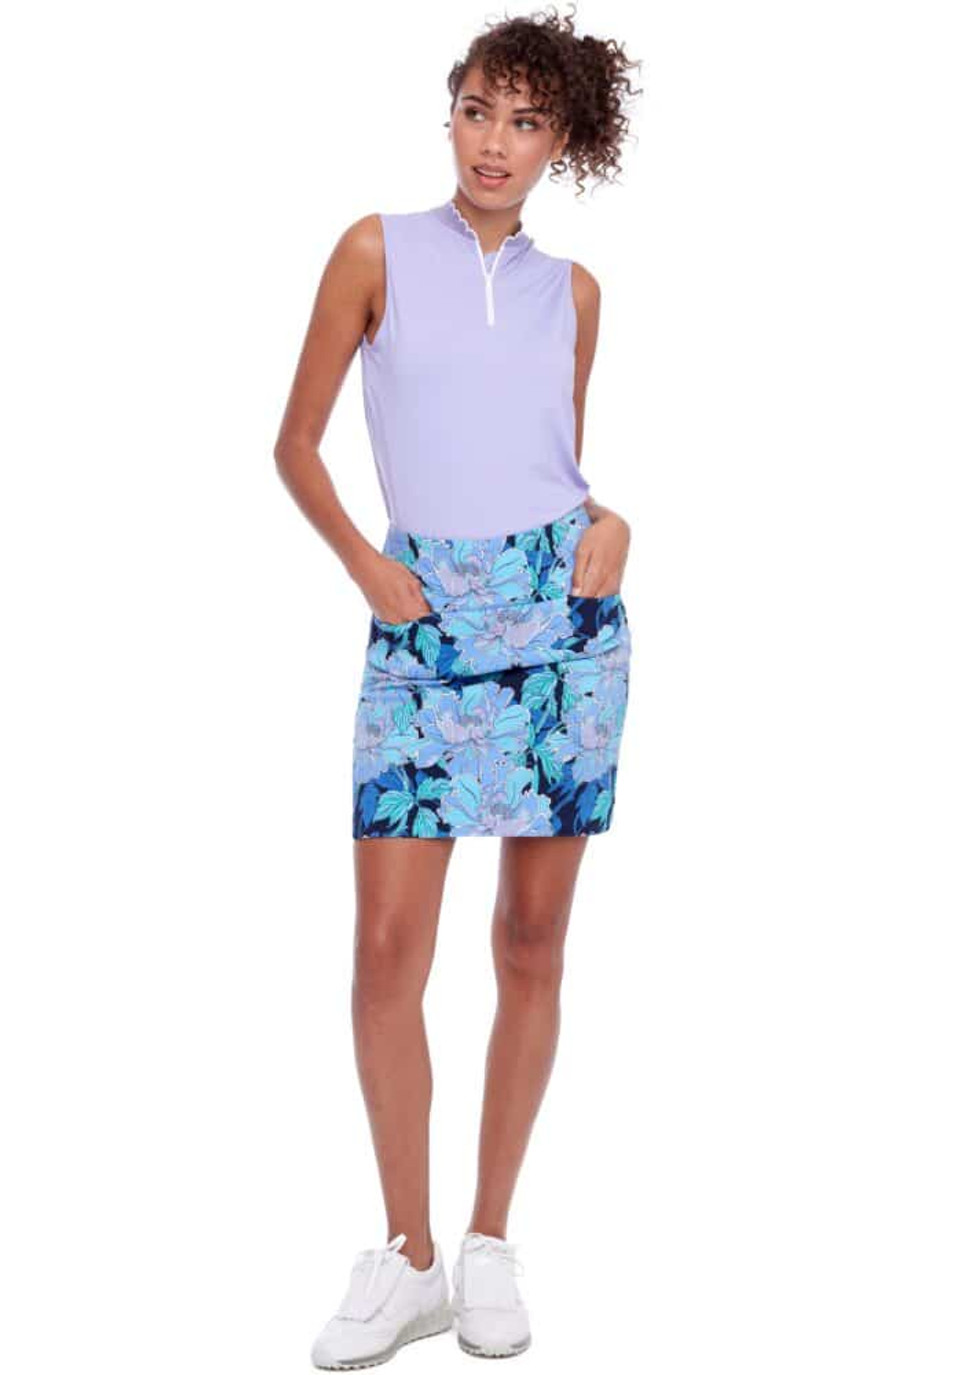 Women's Golf Clothing | Golf shirts, golf dresses, and golf skorts